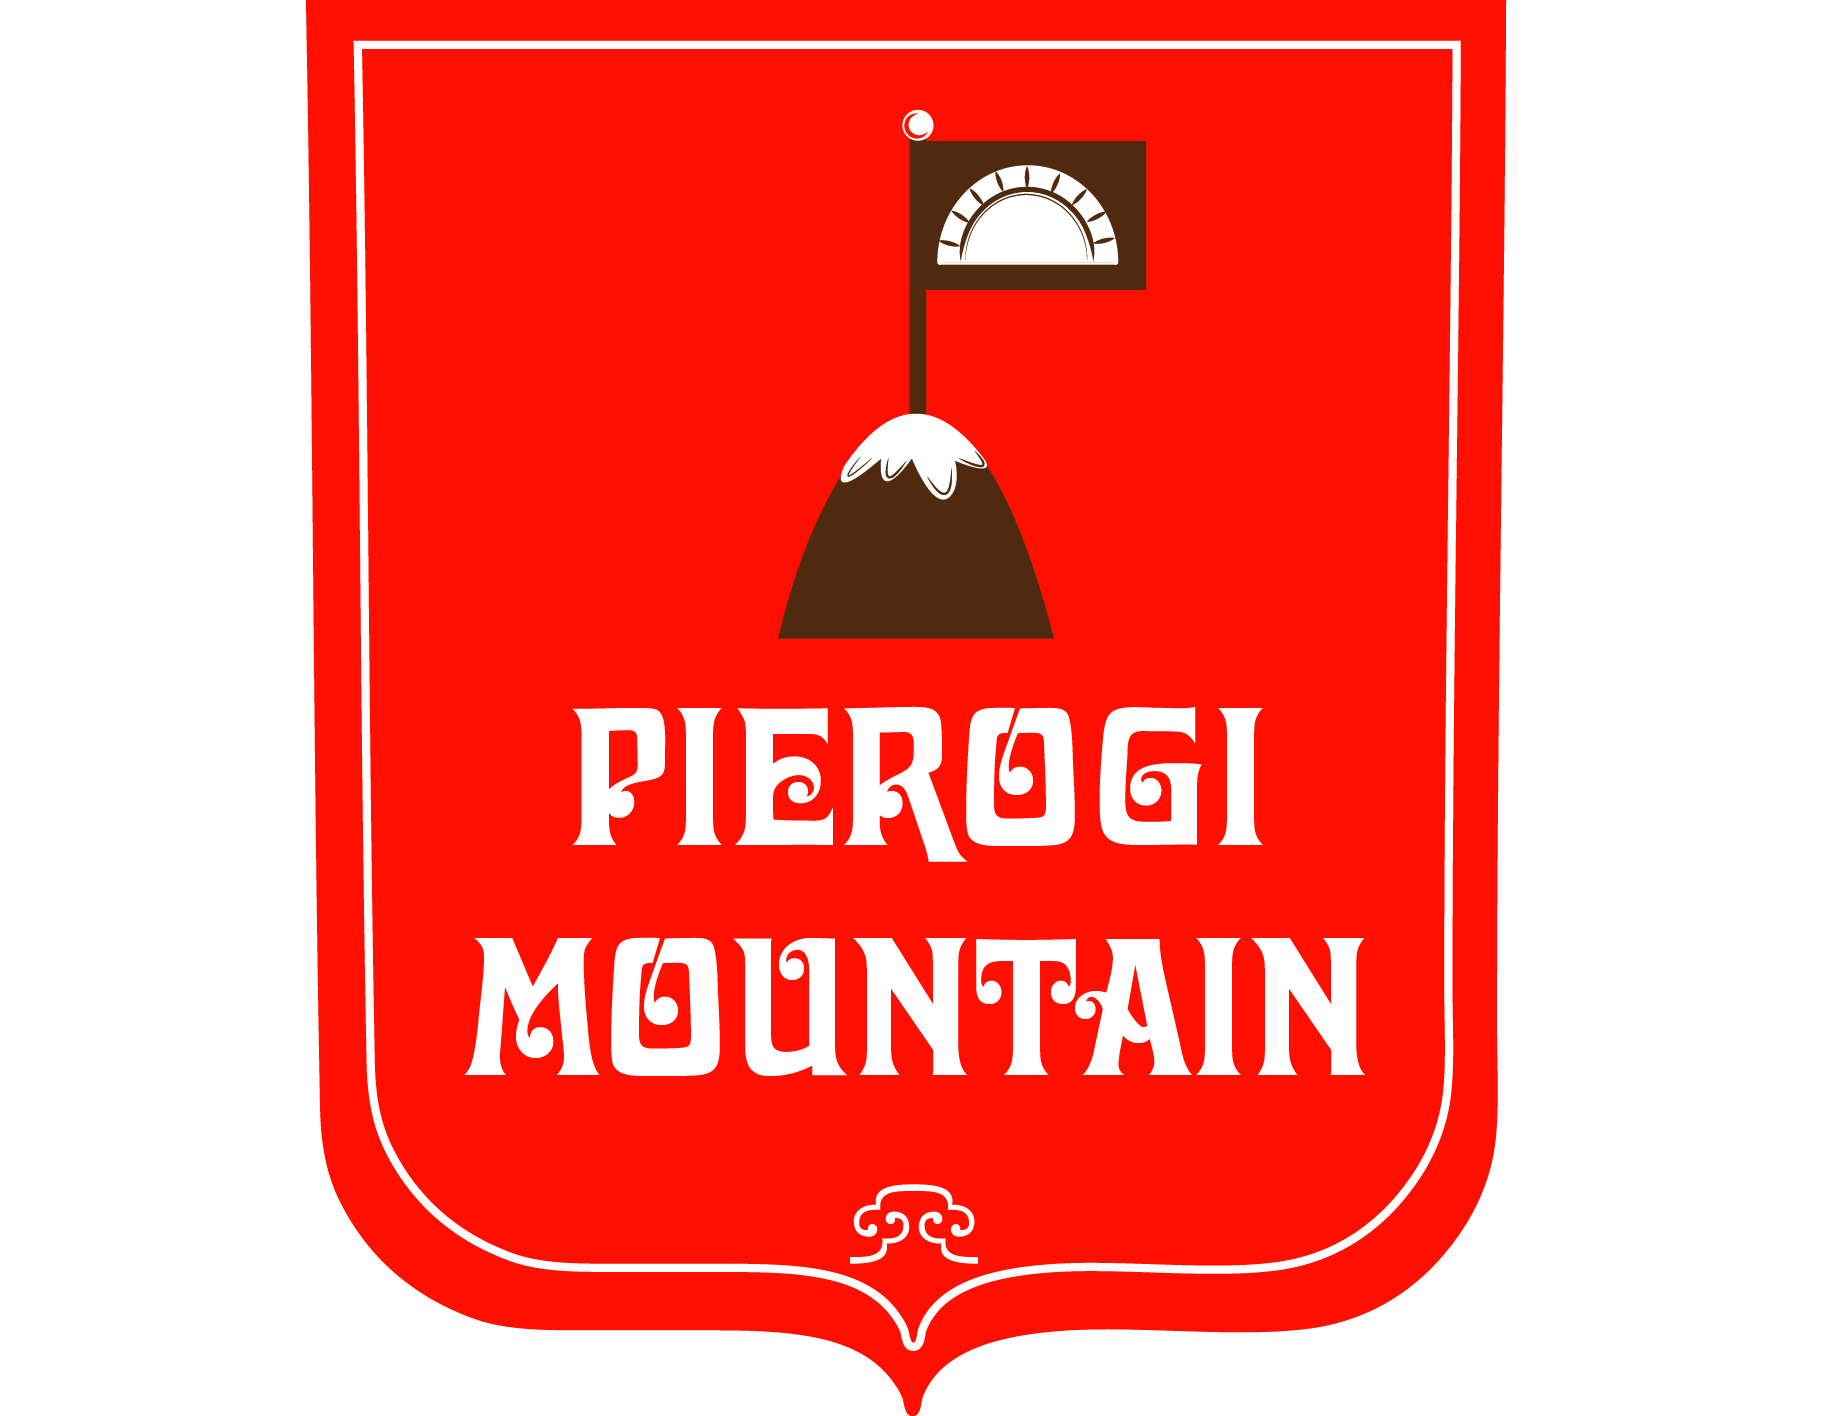 Pierogi Mountain